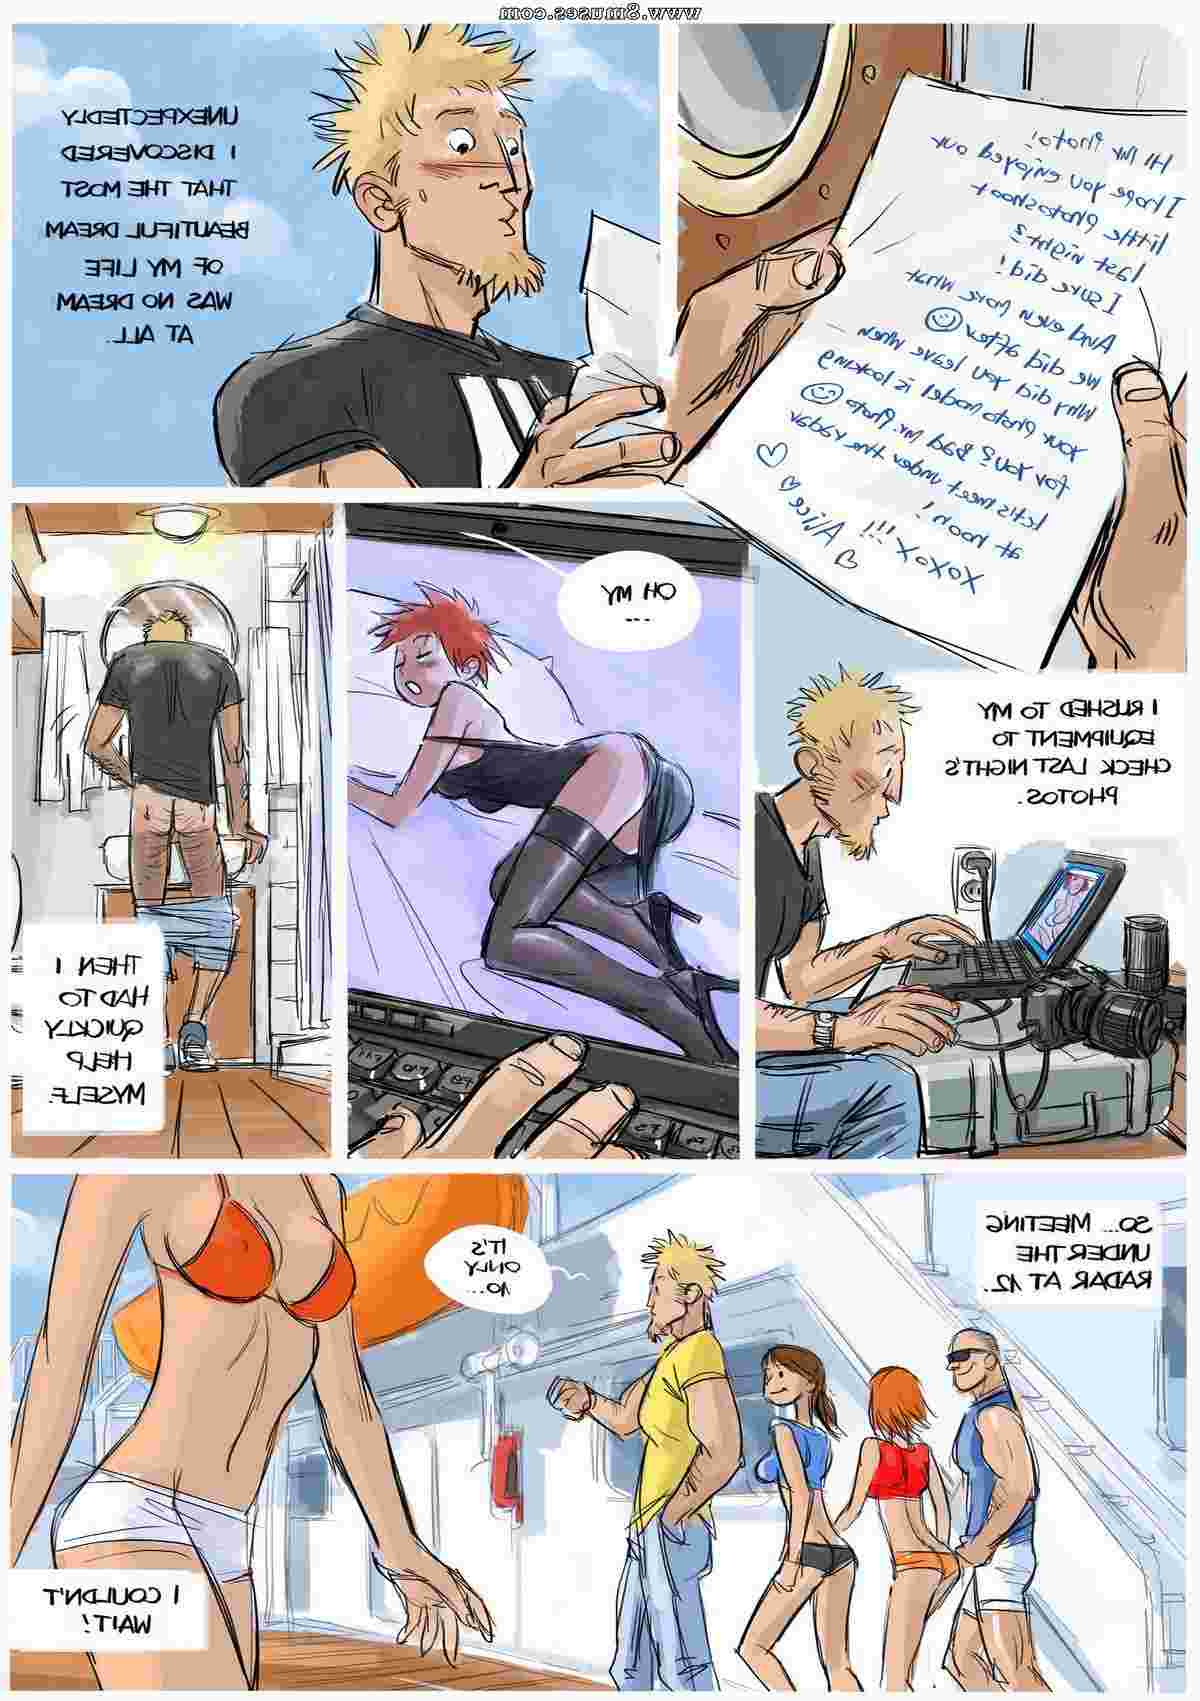 Slipshine-Comics/Lust-Boat Lust_Boat__8muses_-_Sex_and_Porn_Comics_42.jpg